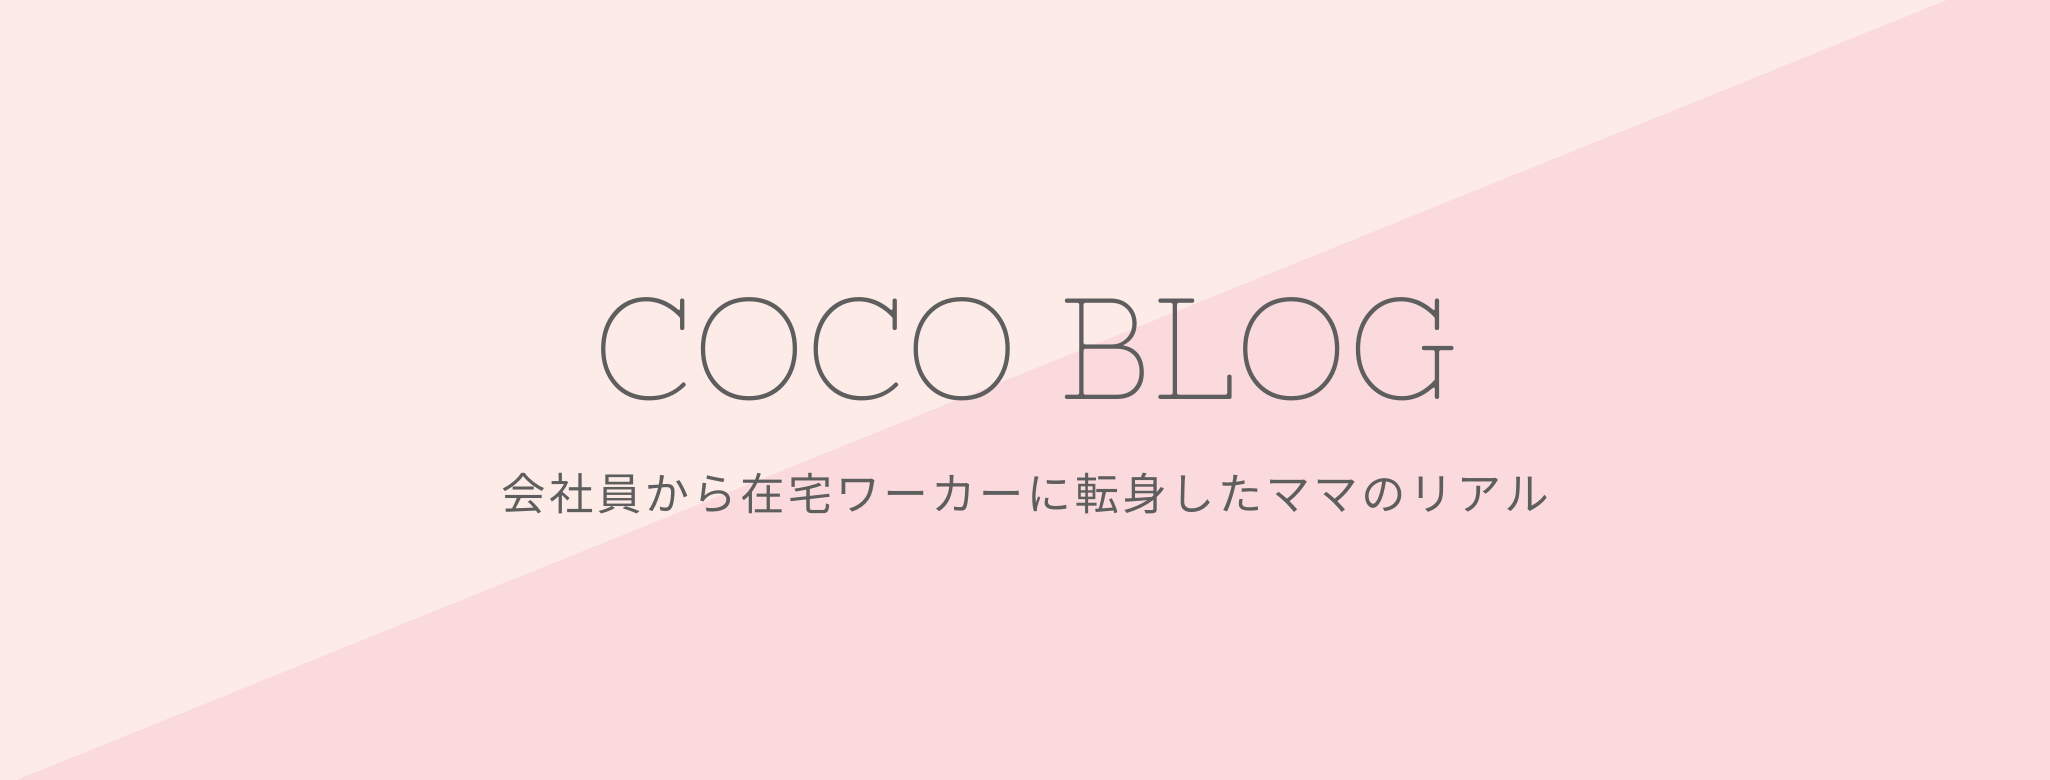 cocoblog